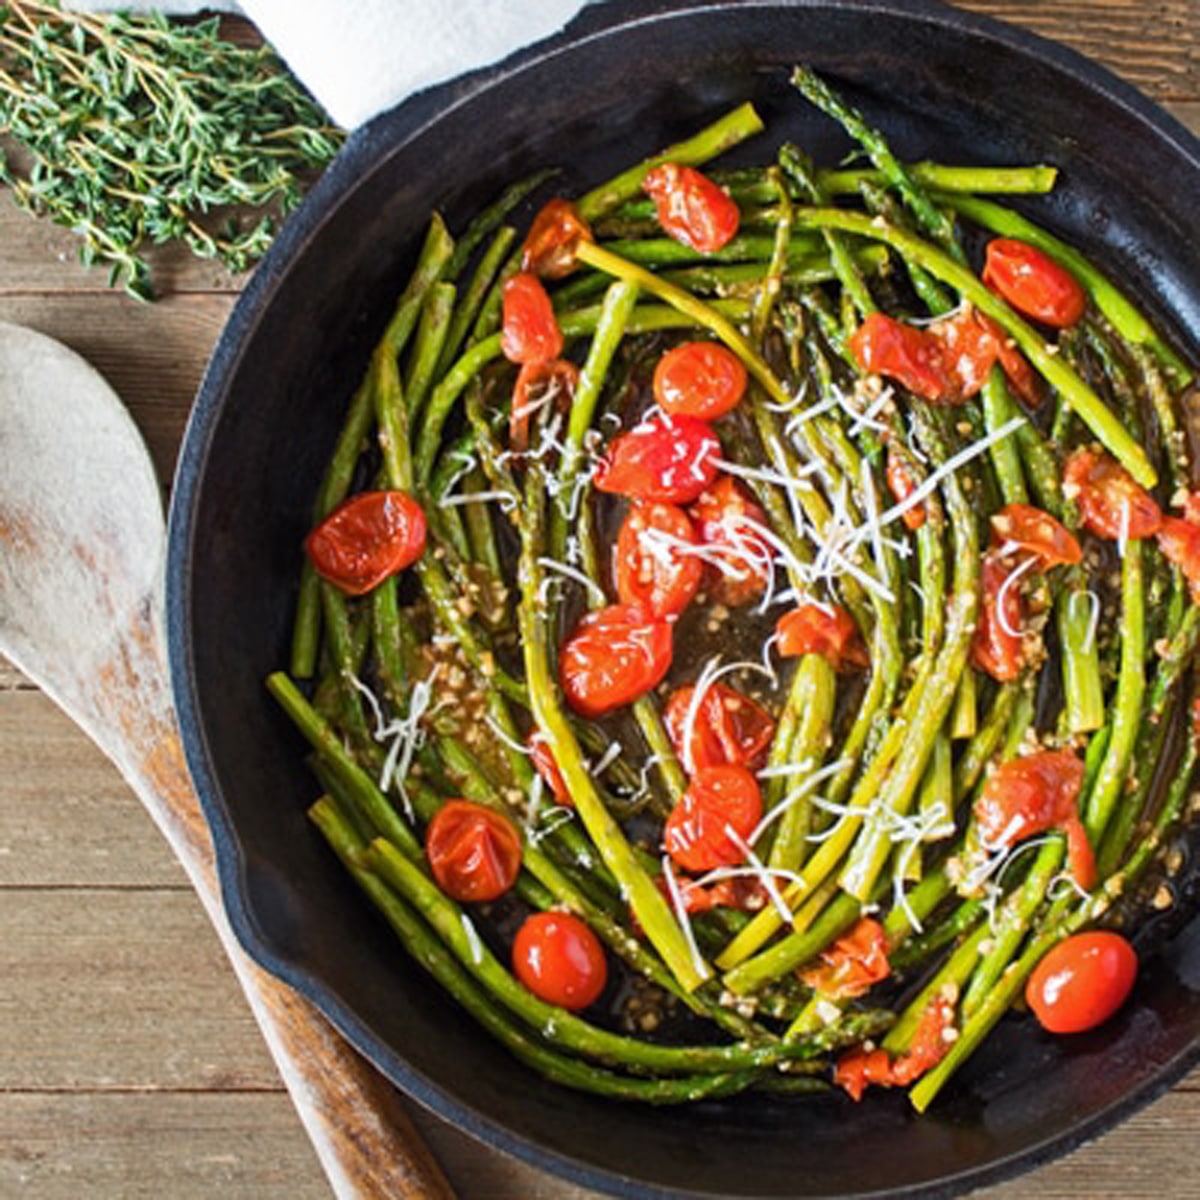 Cara memasak asparagus seperti ini tumis asparagus dengan tomat ceri.